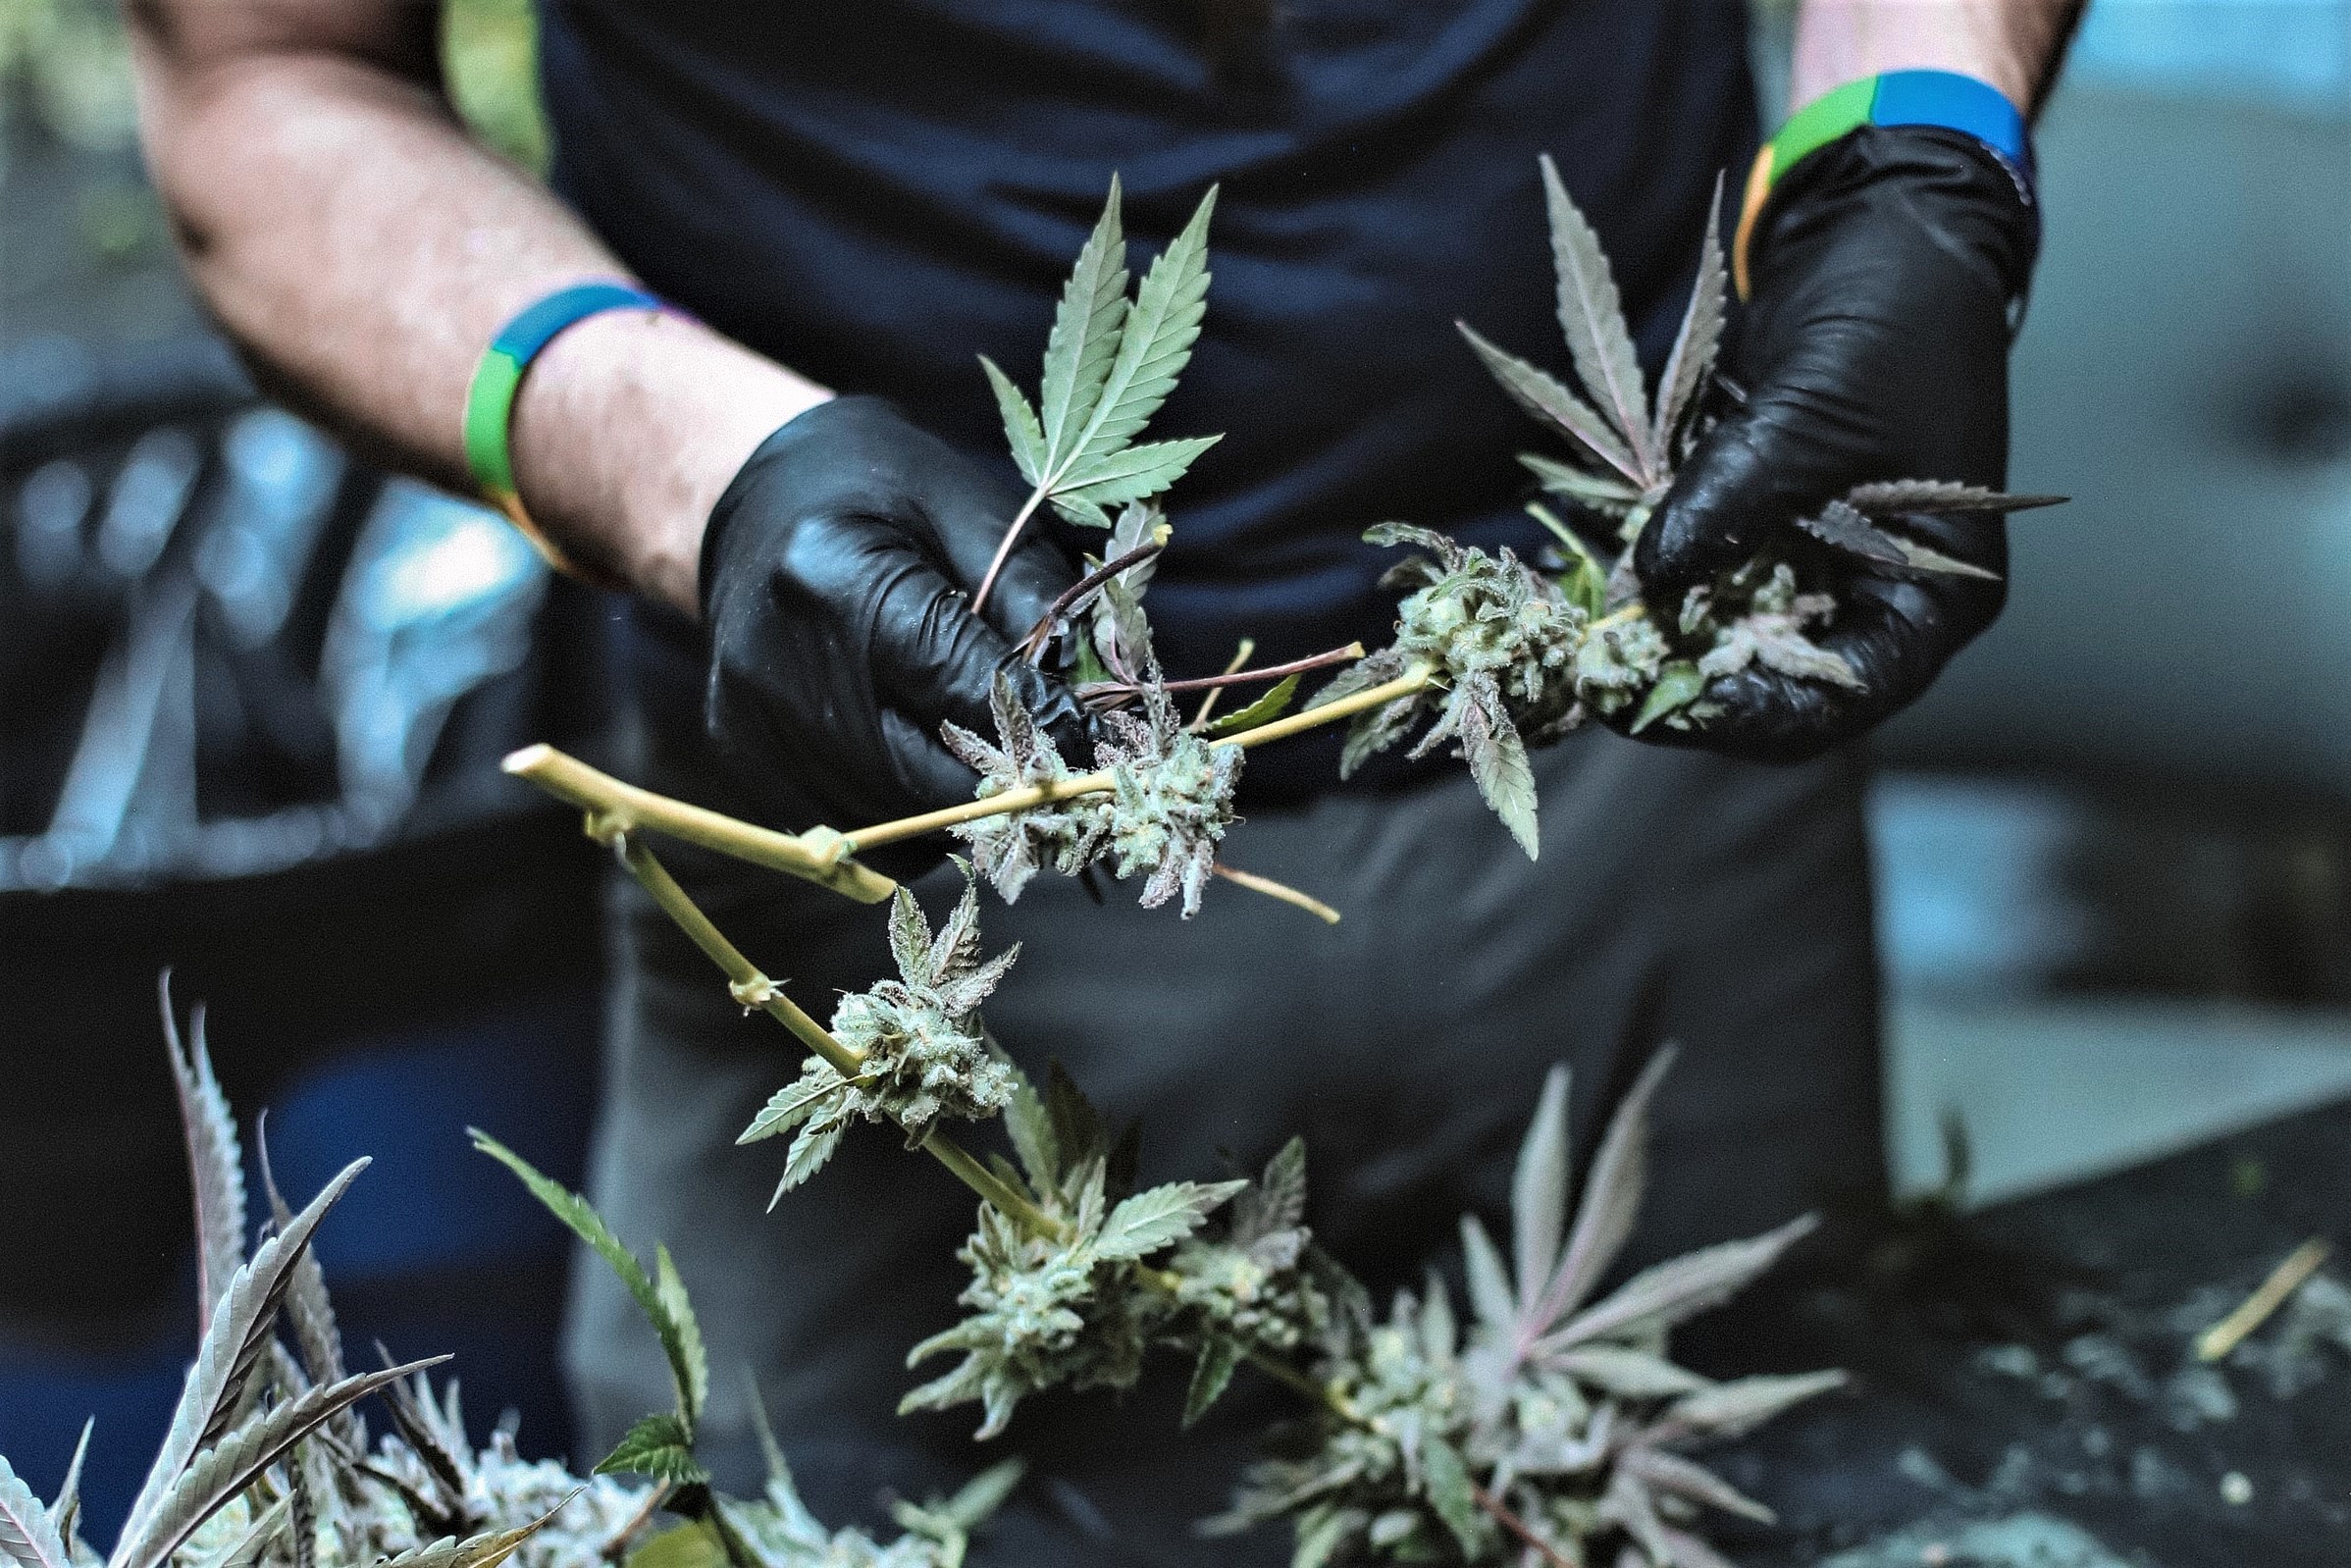 Medical marijuana could be coming soon to people in North Carolina